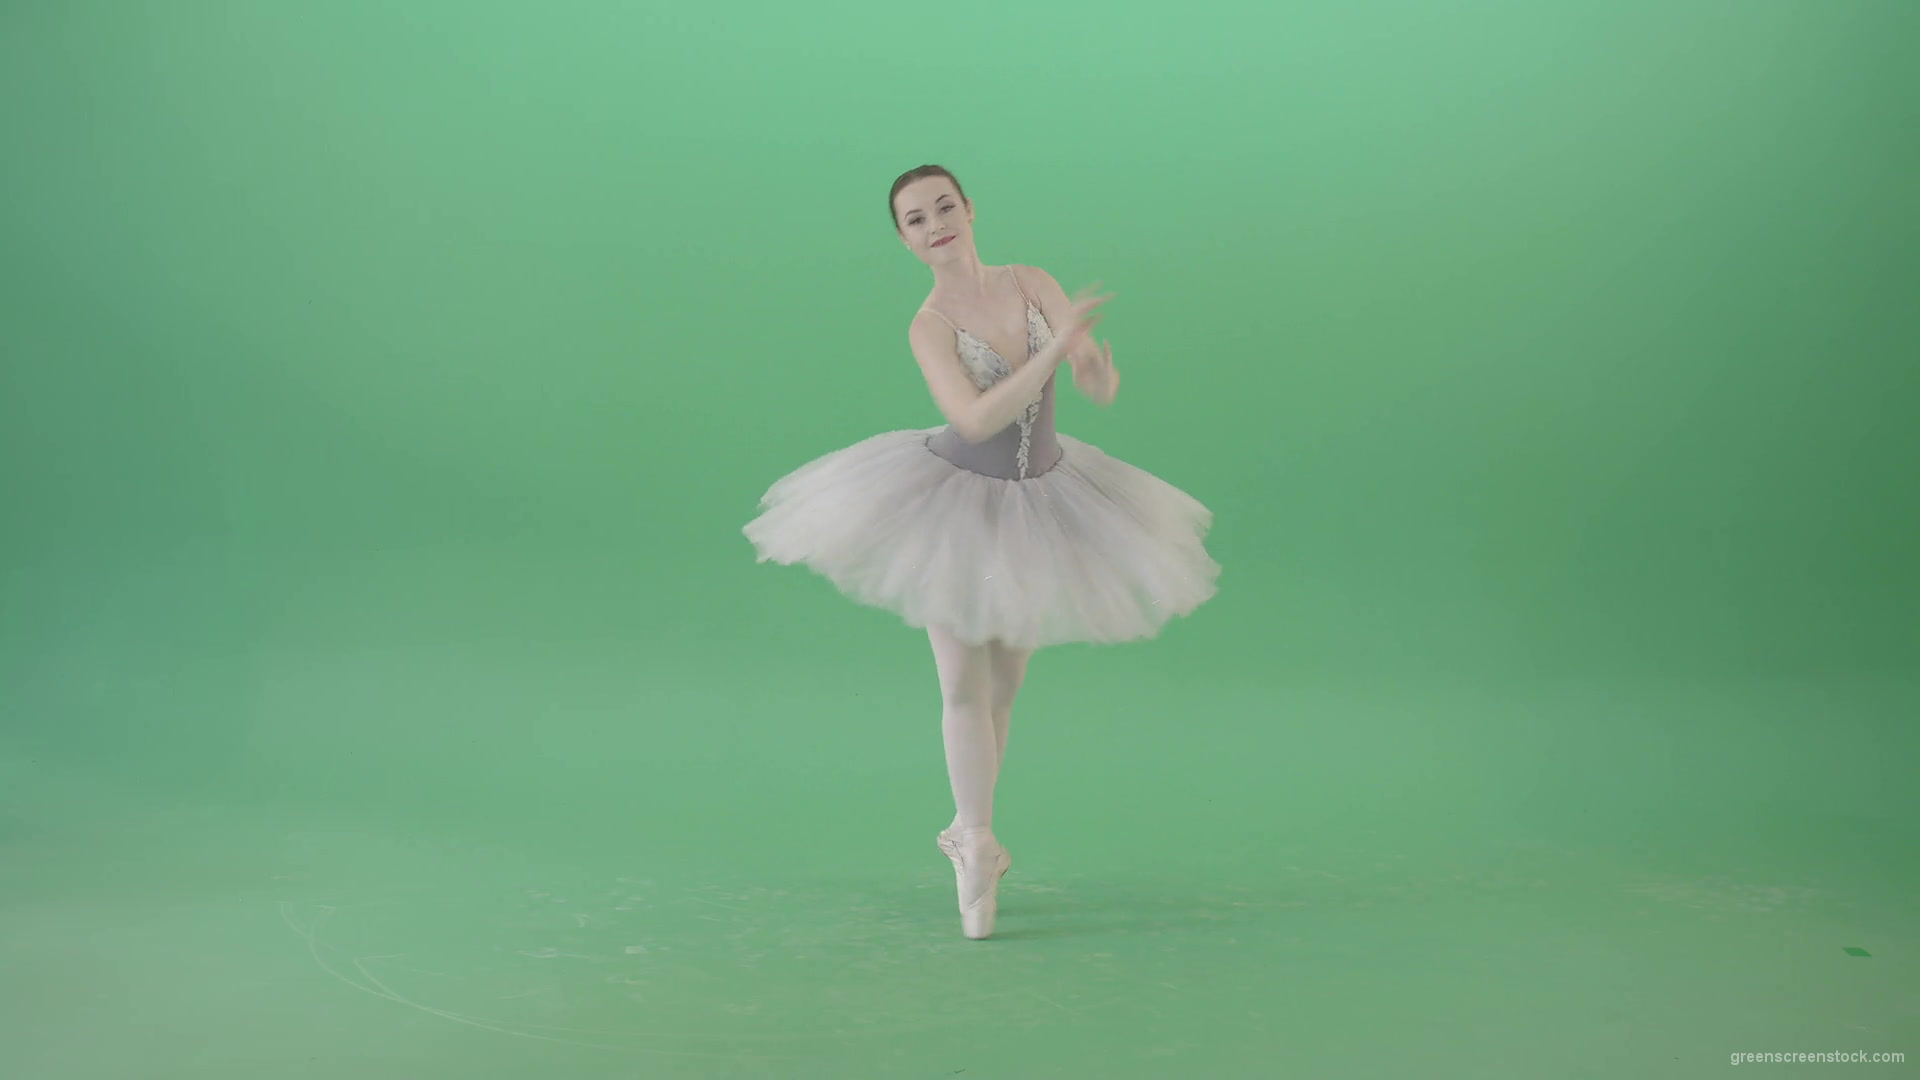 Ballerina-waving-hands-and-dance-on-green-screen-4K-Video-Footage-1920_009 Green Screen Stock